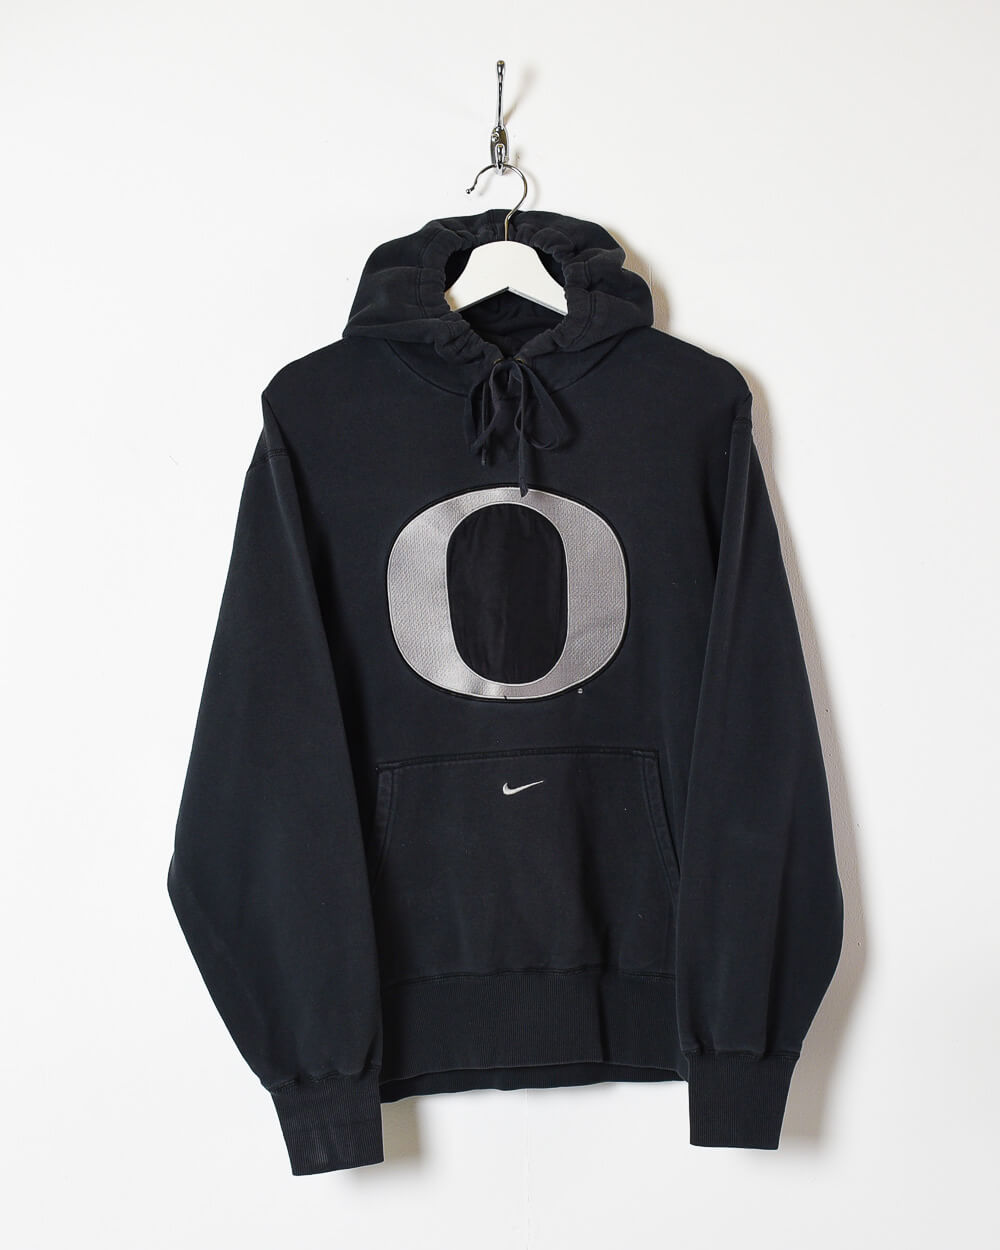 Black Nike Oregon Hoodie - Medium